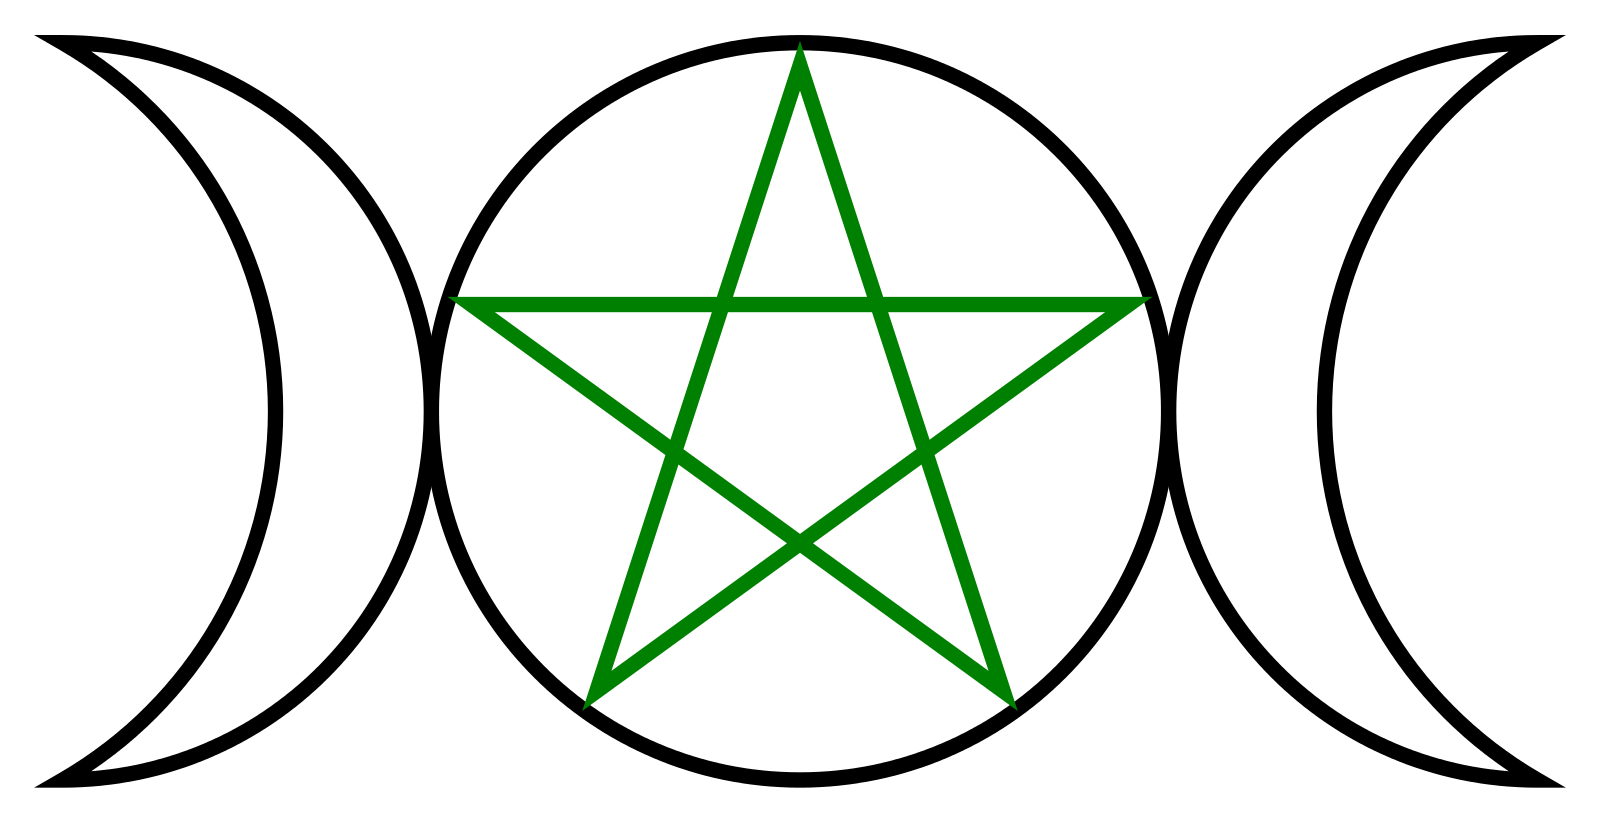 Луна пентаклей. Пентаграмма виккан. Звезда пентаграмма. Викканство символ Богини.